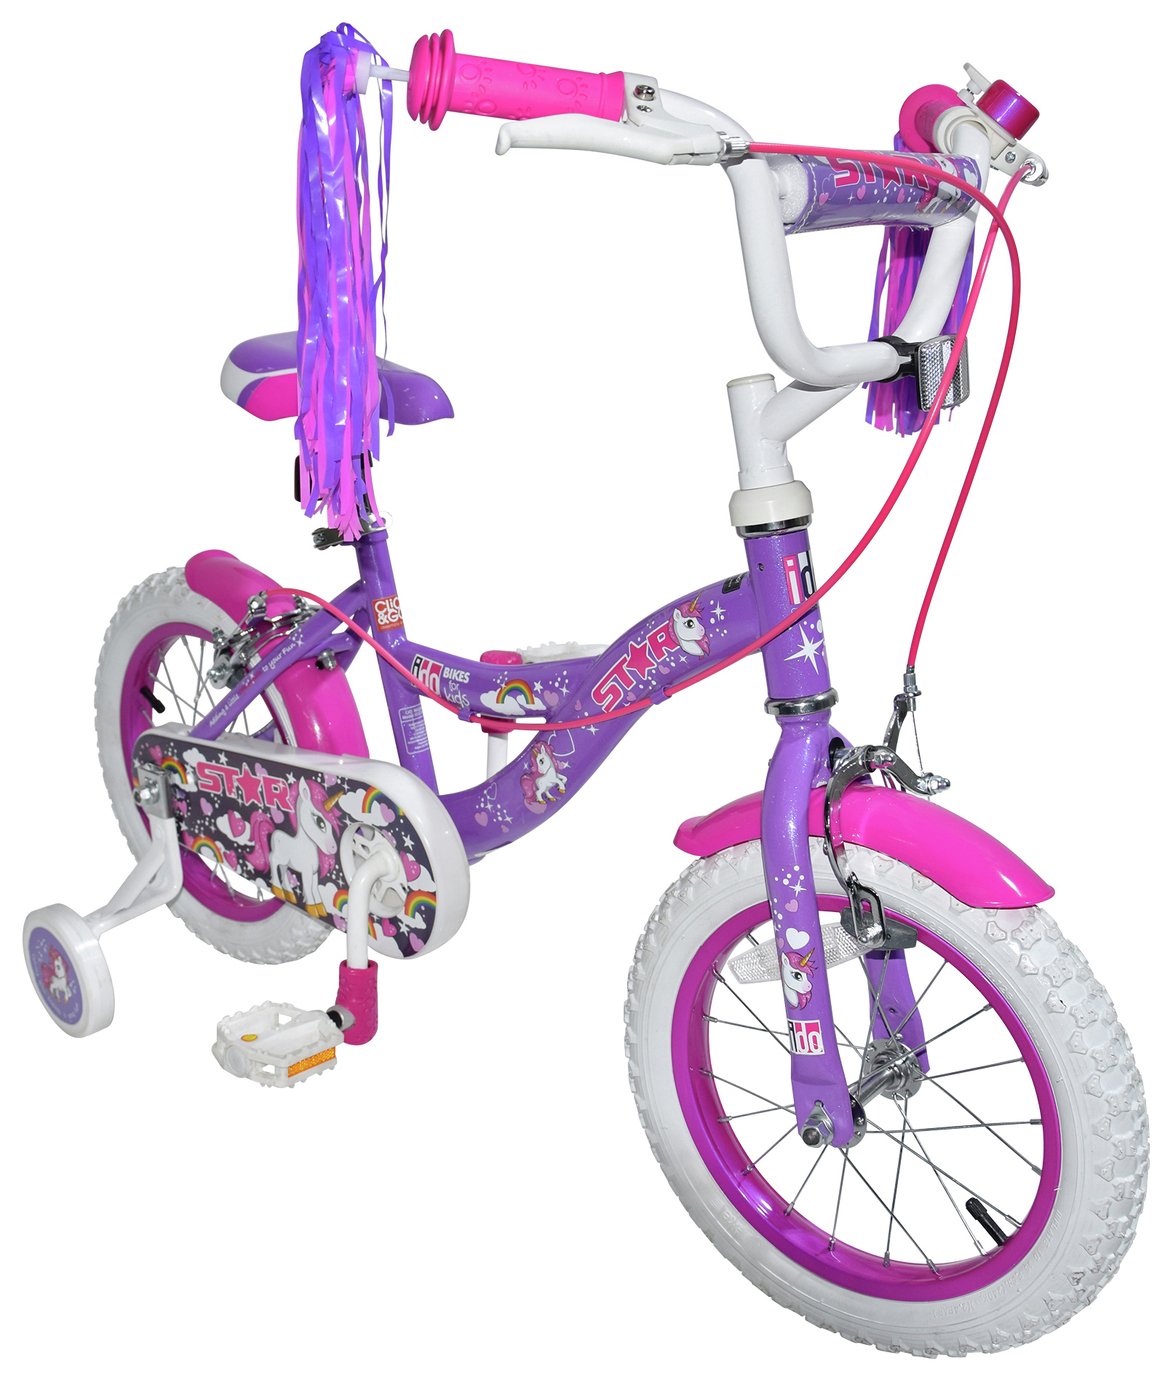 pazzaz 18 inch wheel size kids bike